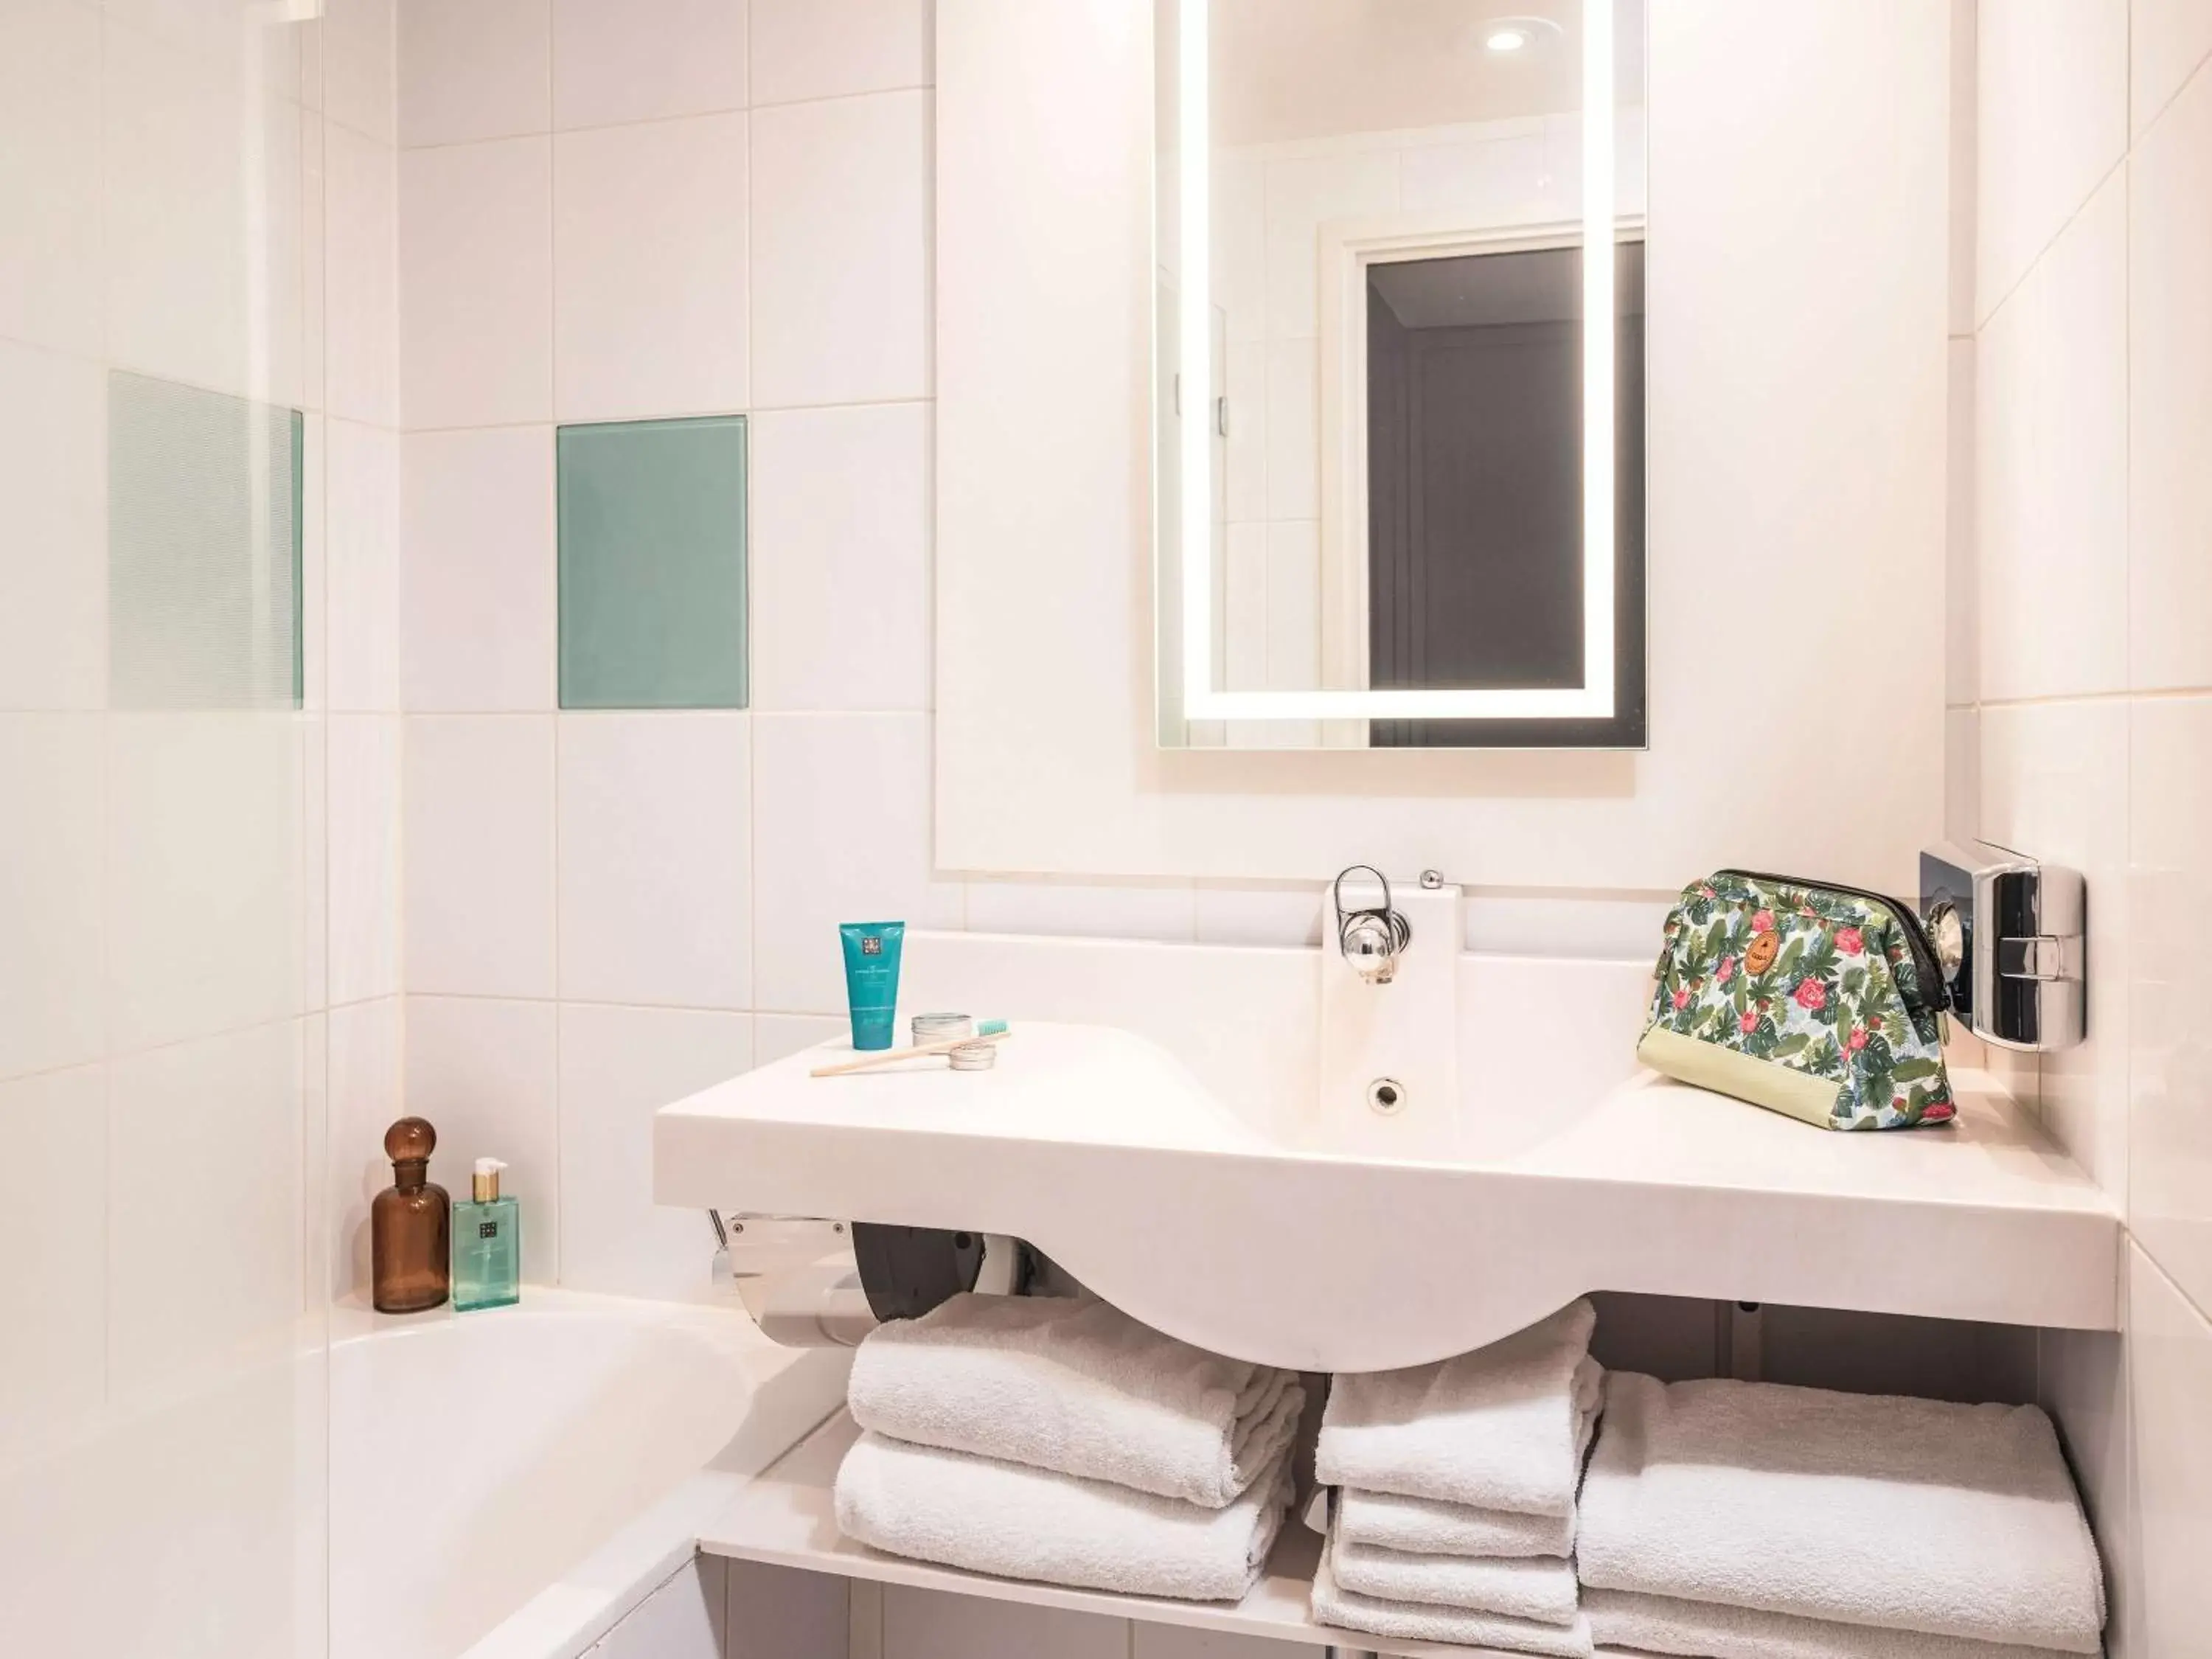 Photo of the whole room, Bathroom in Novotel Paris Vaugirard Montparnasse